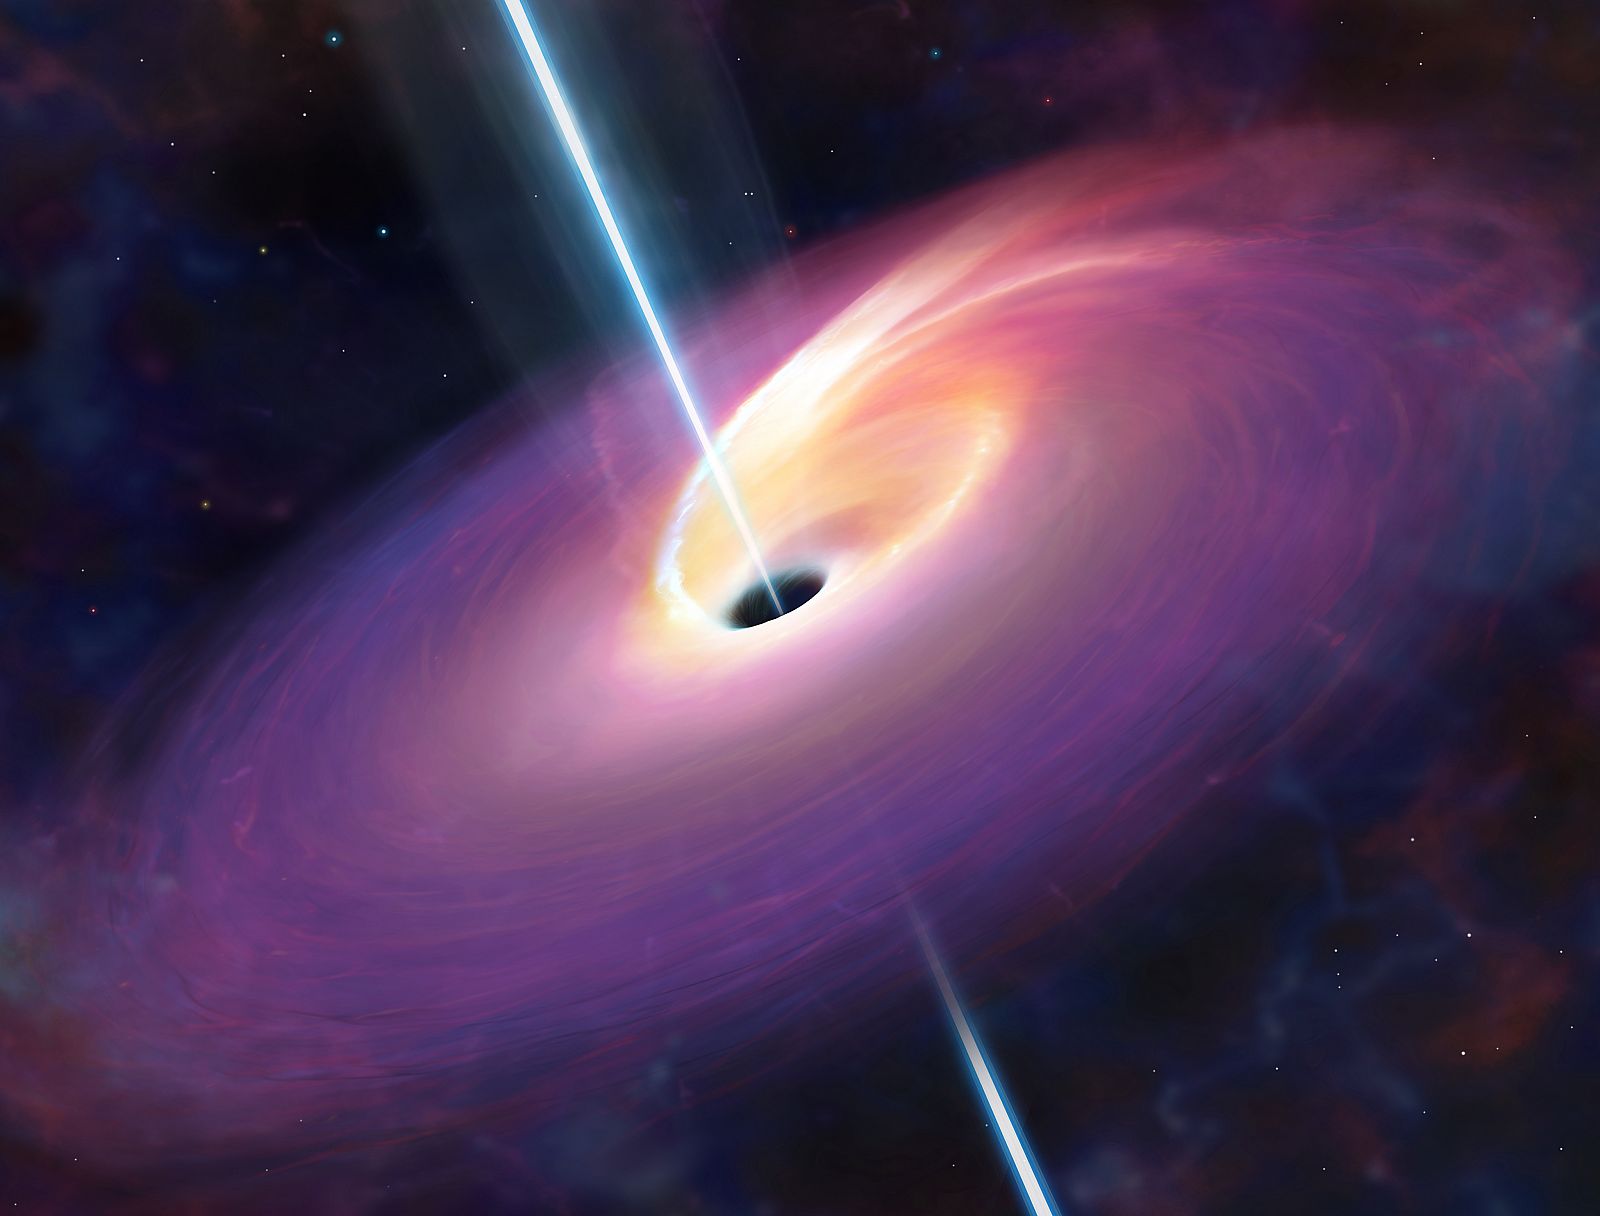 La estrella desapareció tragada por el agujero negro masivo